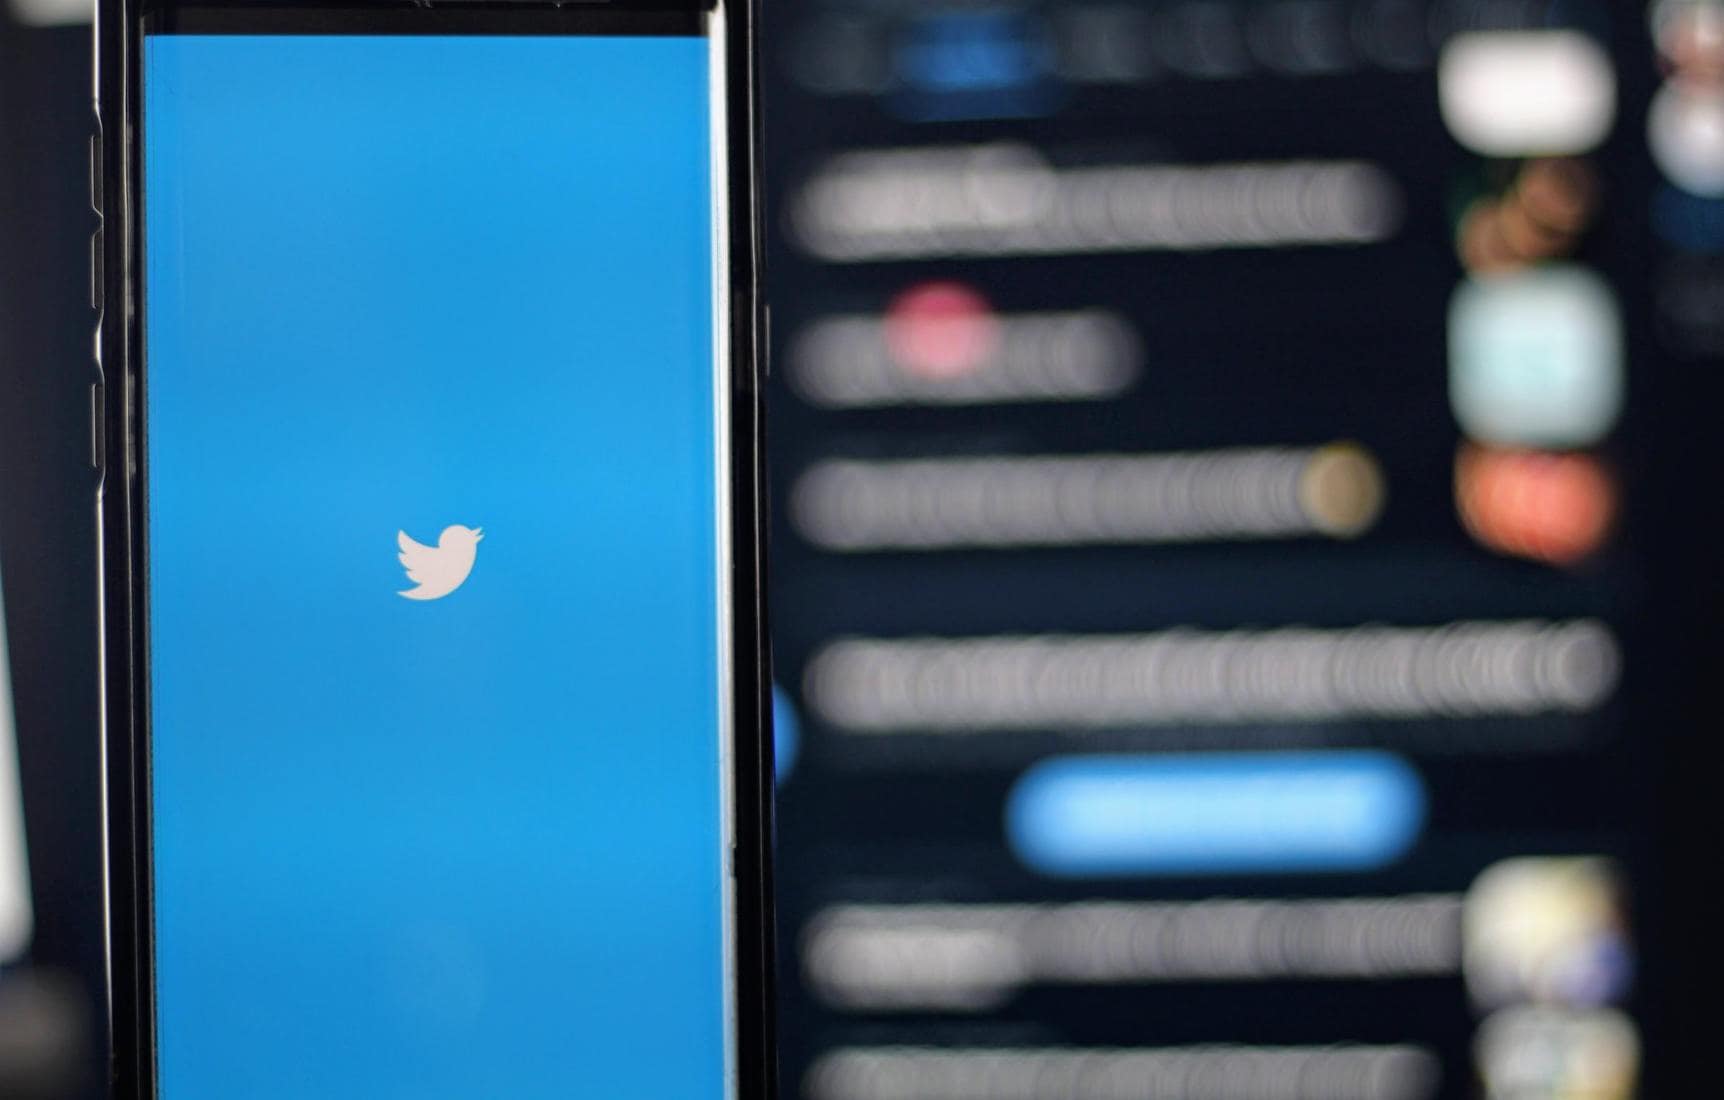 Phone showing Twitter logo